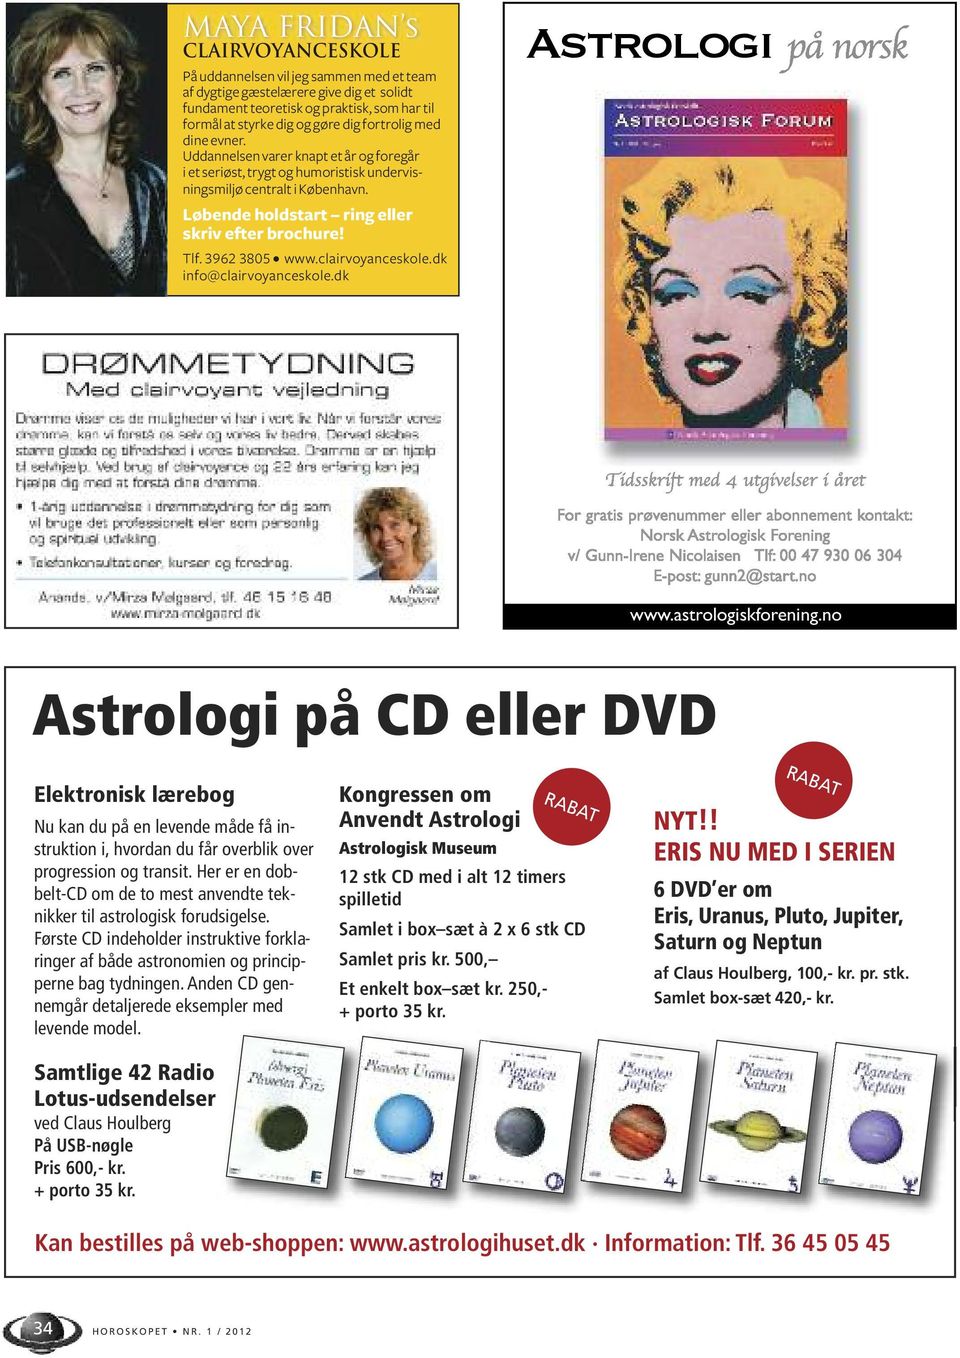 3962 3805 www.clairvoyanceskole.dk info@clairvoyanceskole.dk Astrologi www.astrologiskforening.